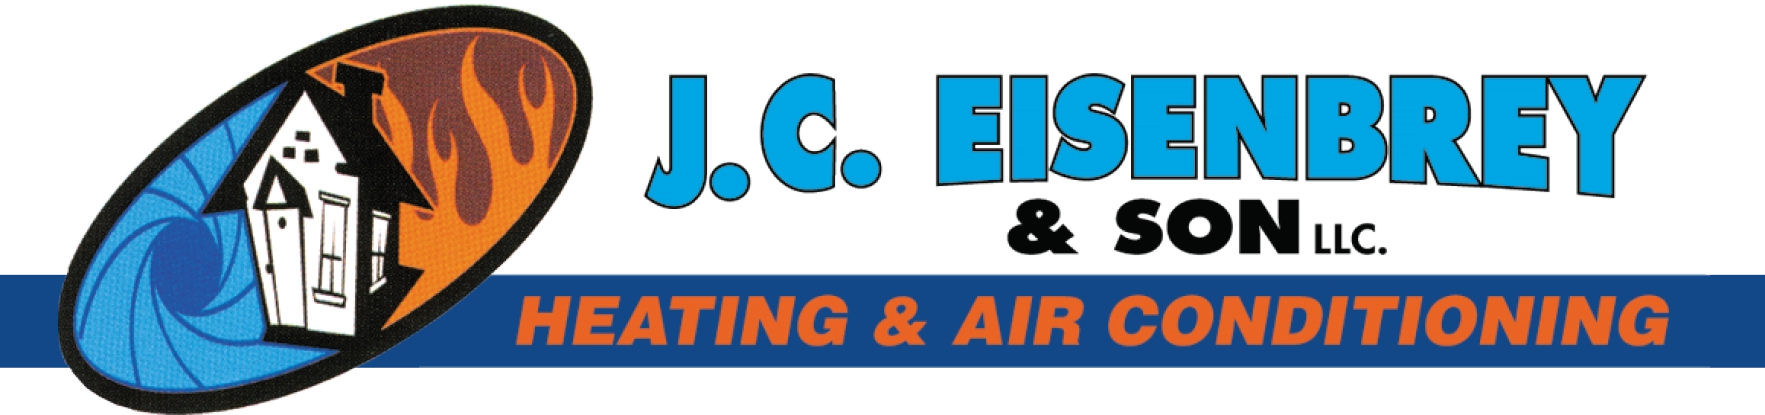 J C Eisenbrey & Son LLC Logo